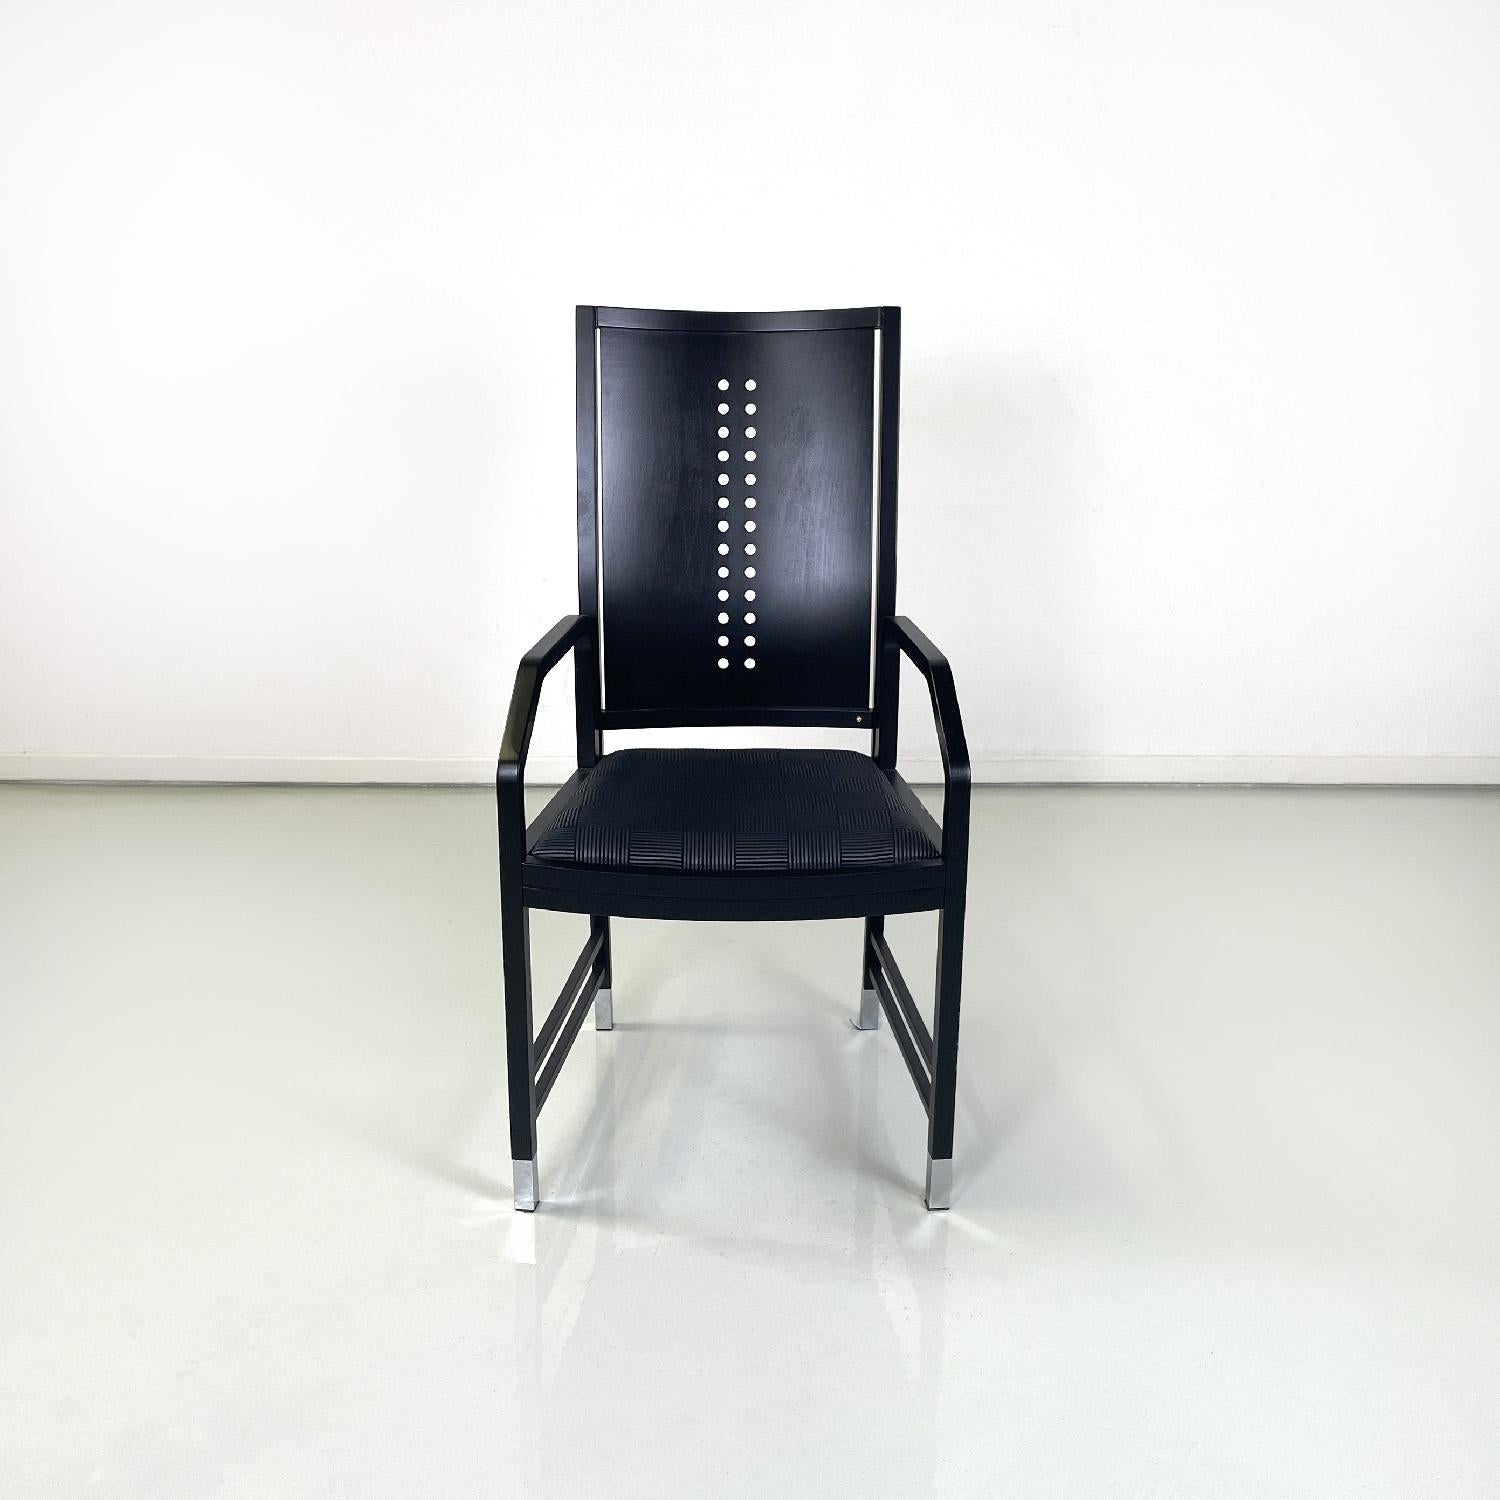 Modern Austrian modern black wooden chairs by Ernst W. Beranek for Thonet, 1990s For Sale